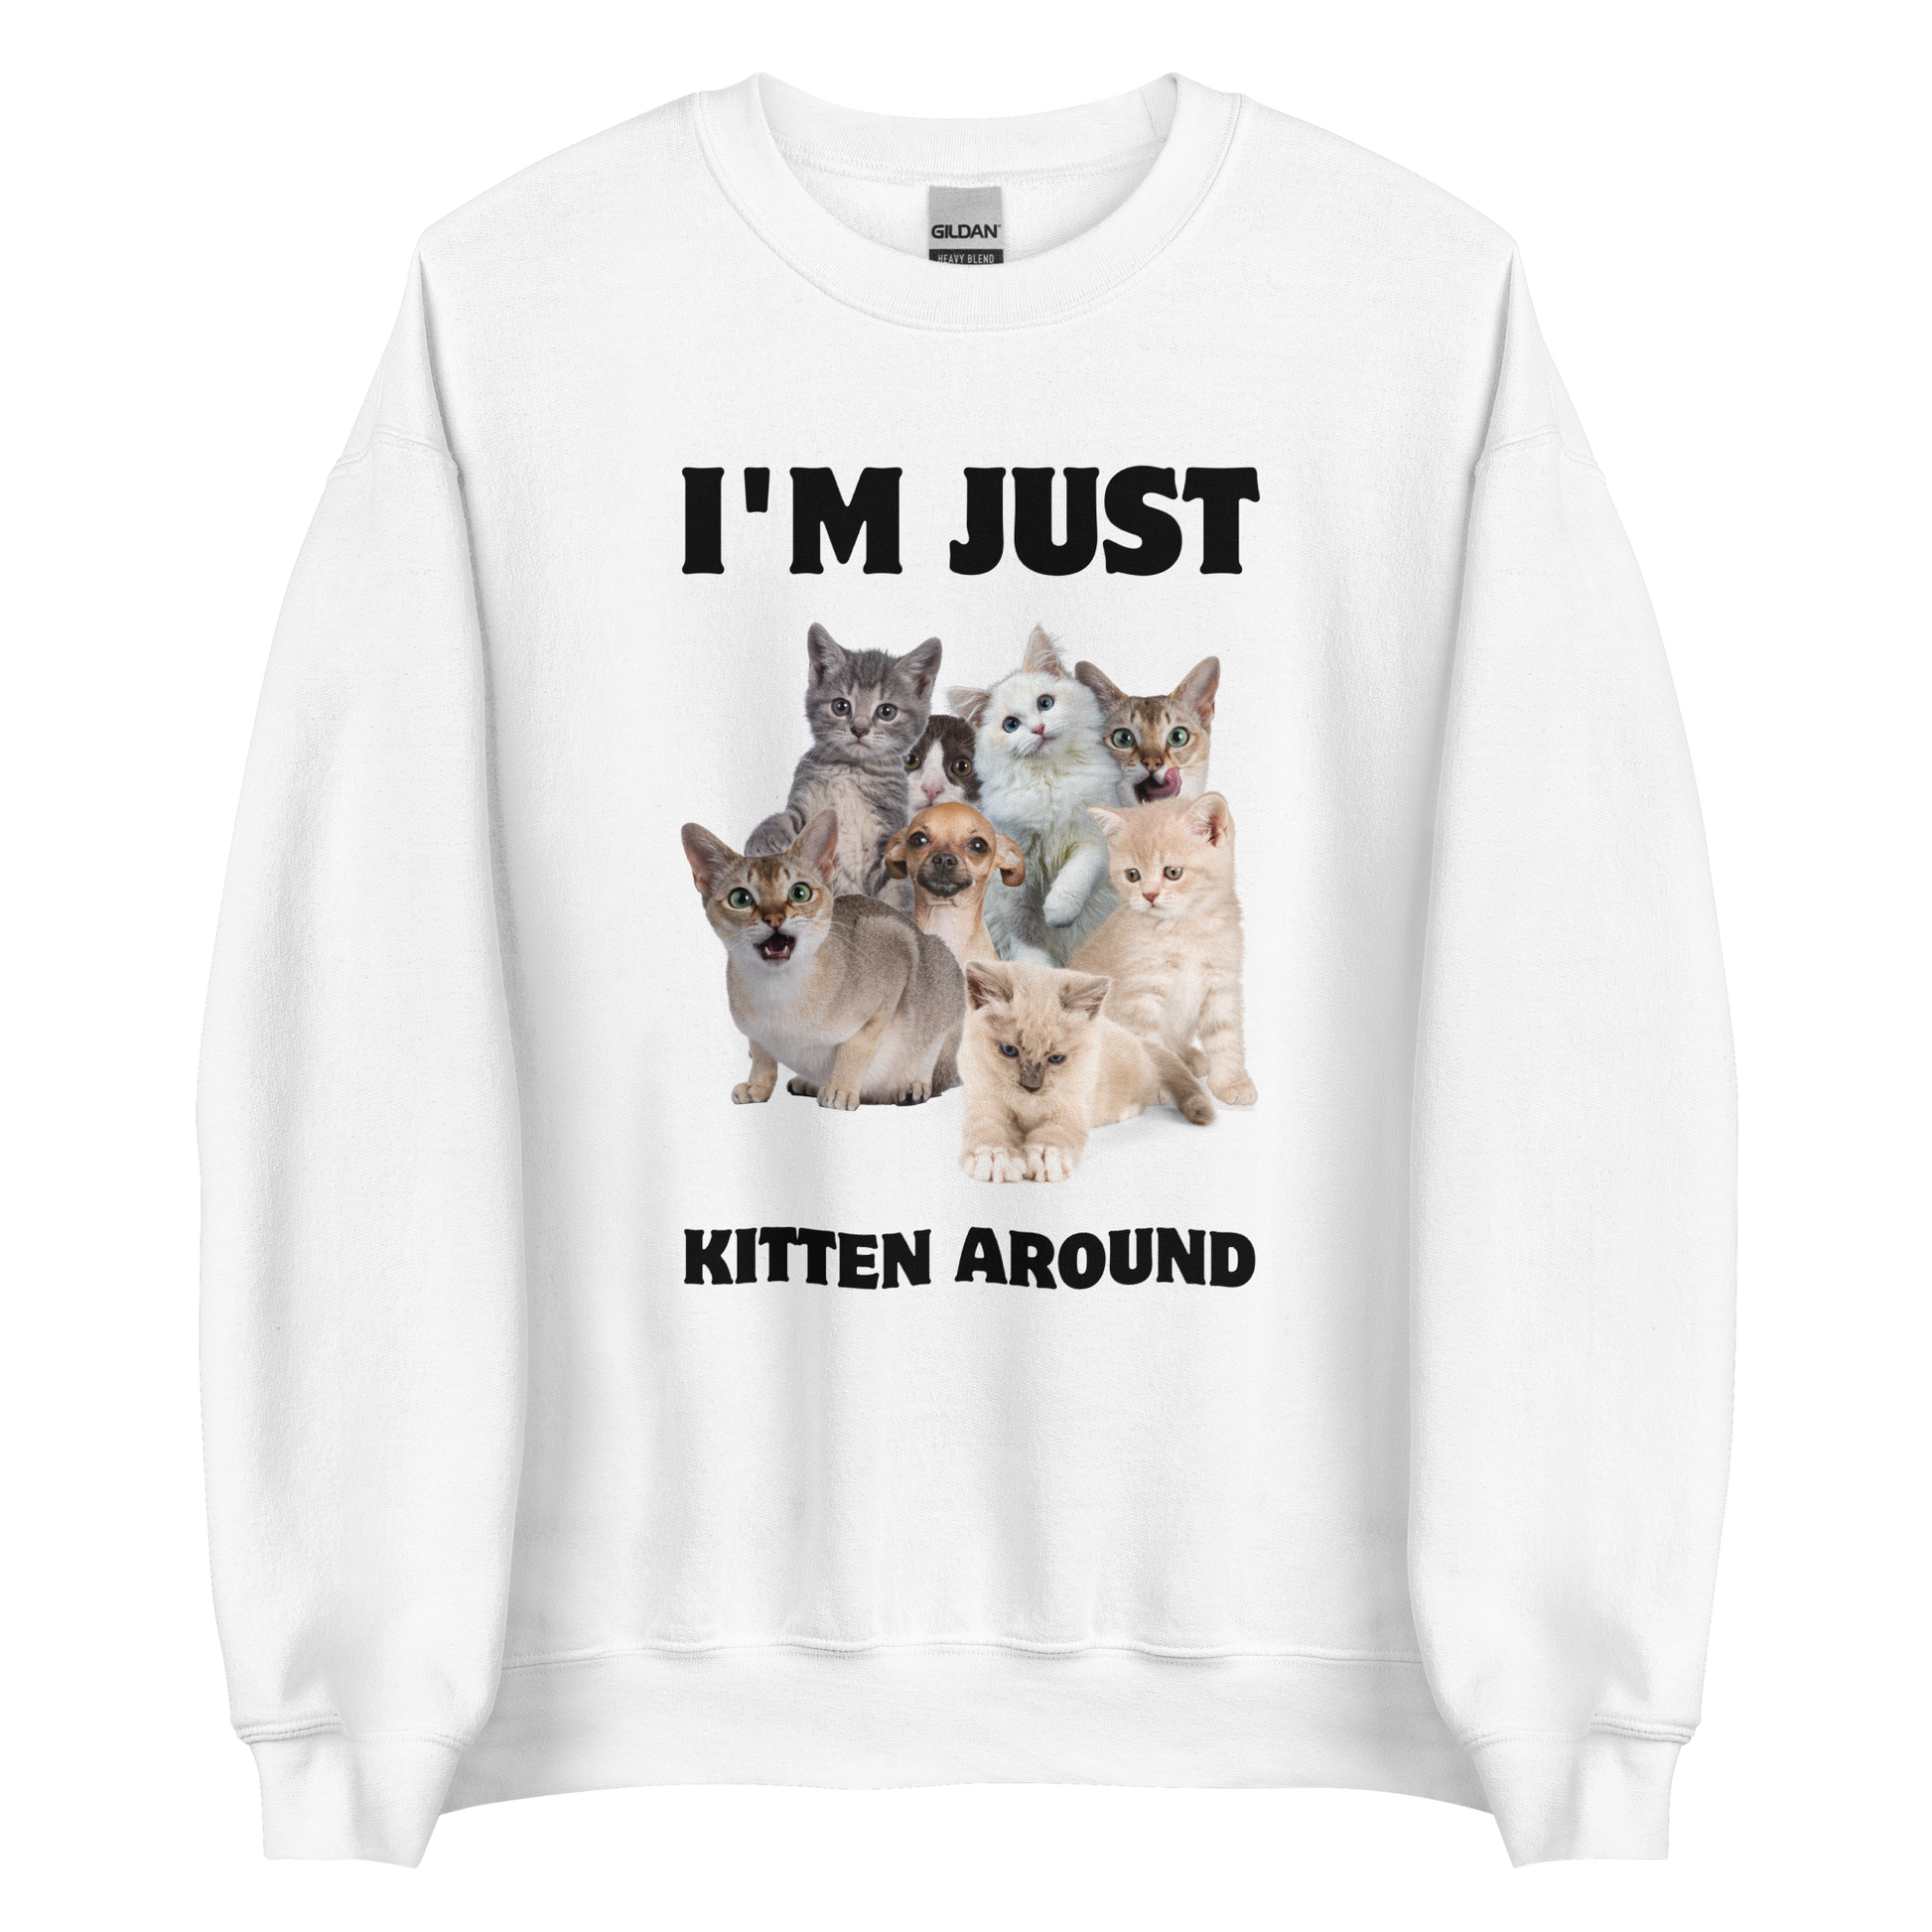 White Cat Sweatshirt featuring an I'm Just Kitten Around graphic on the chest - Funny Graphic Cat Sweatshirts - Boozy Fox